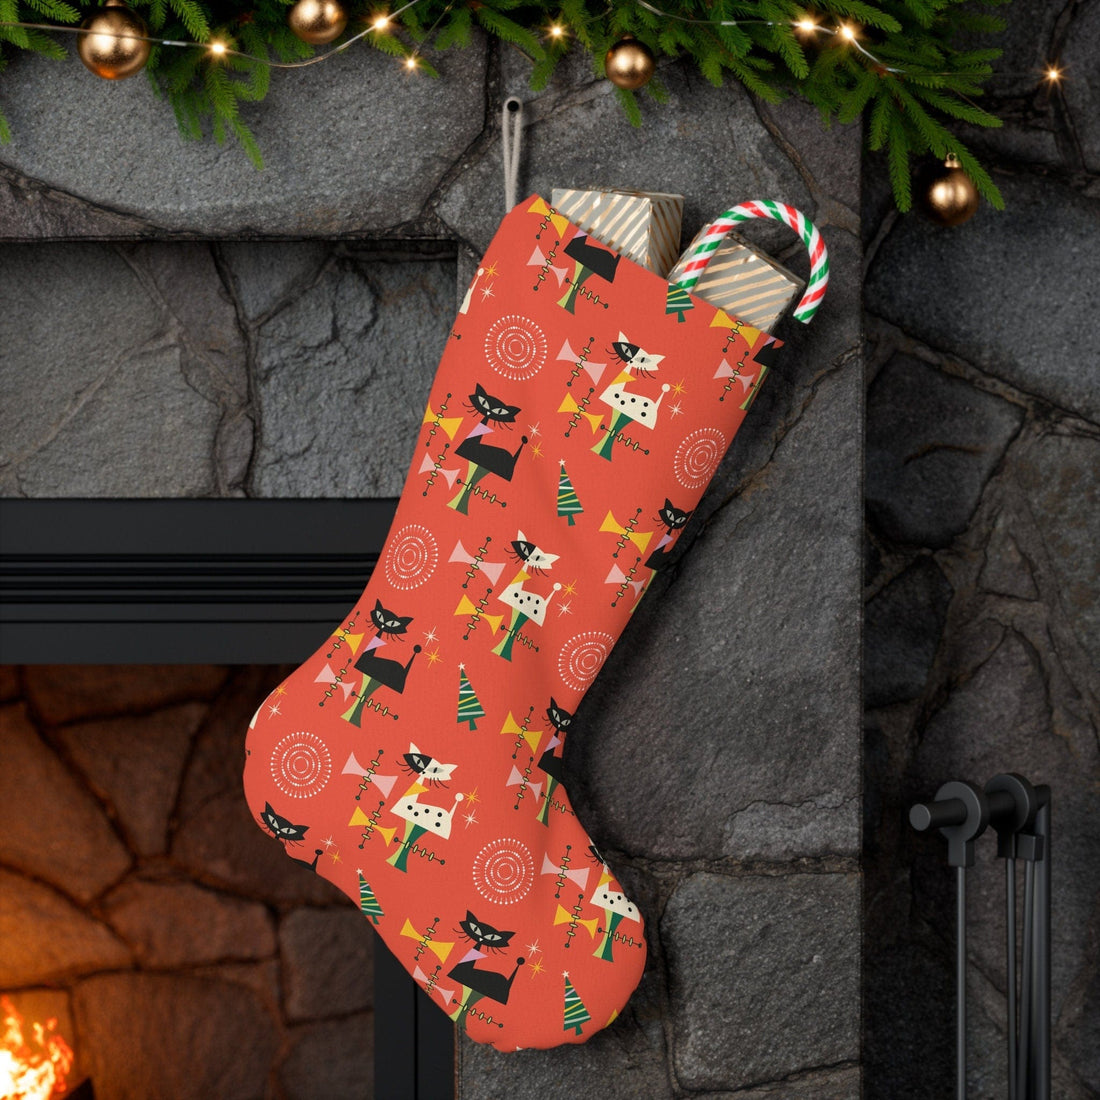 Kate McEnroe New York Atomic Cat Santa Stocking, Retro Starburst Christmas Decor, 1950s Vintage style Christmas StockingsHoliday Stockings30325225707929718430